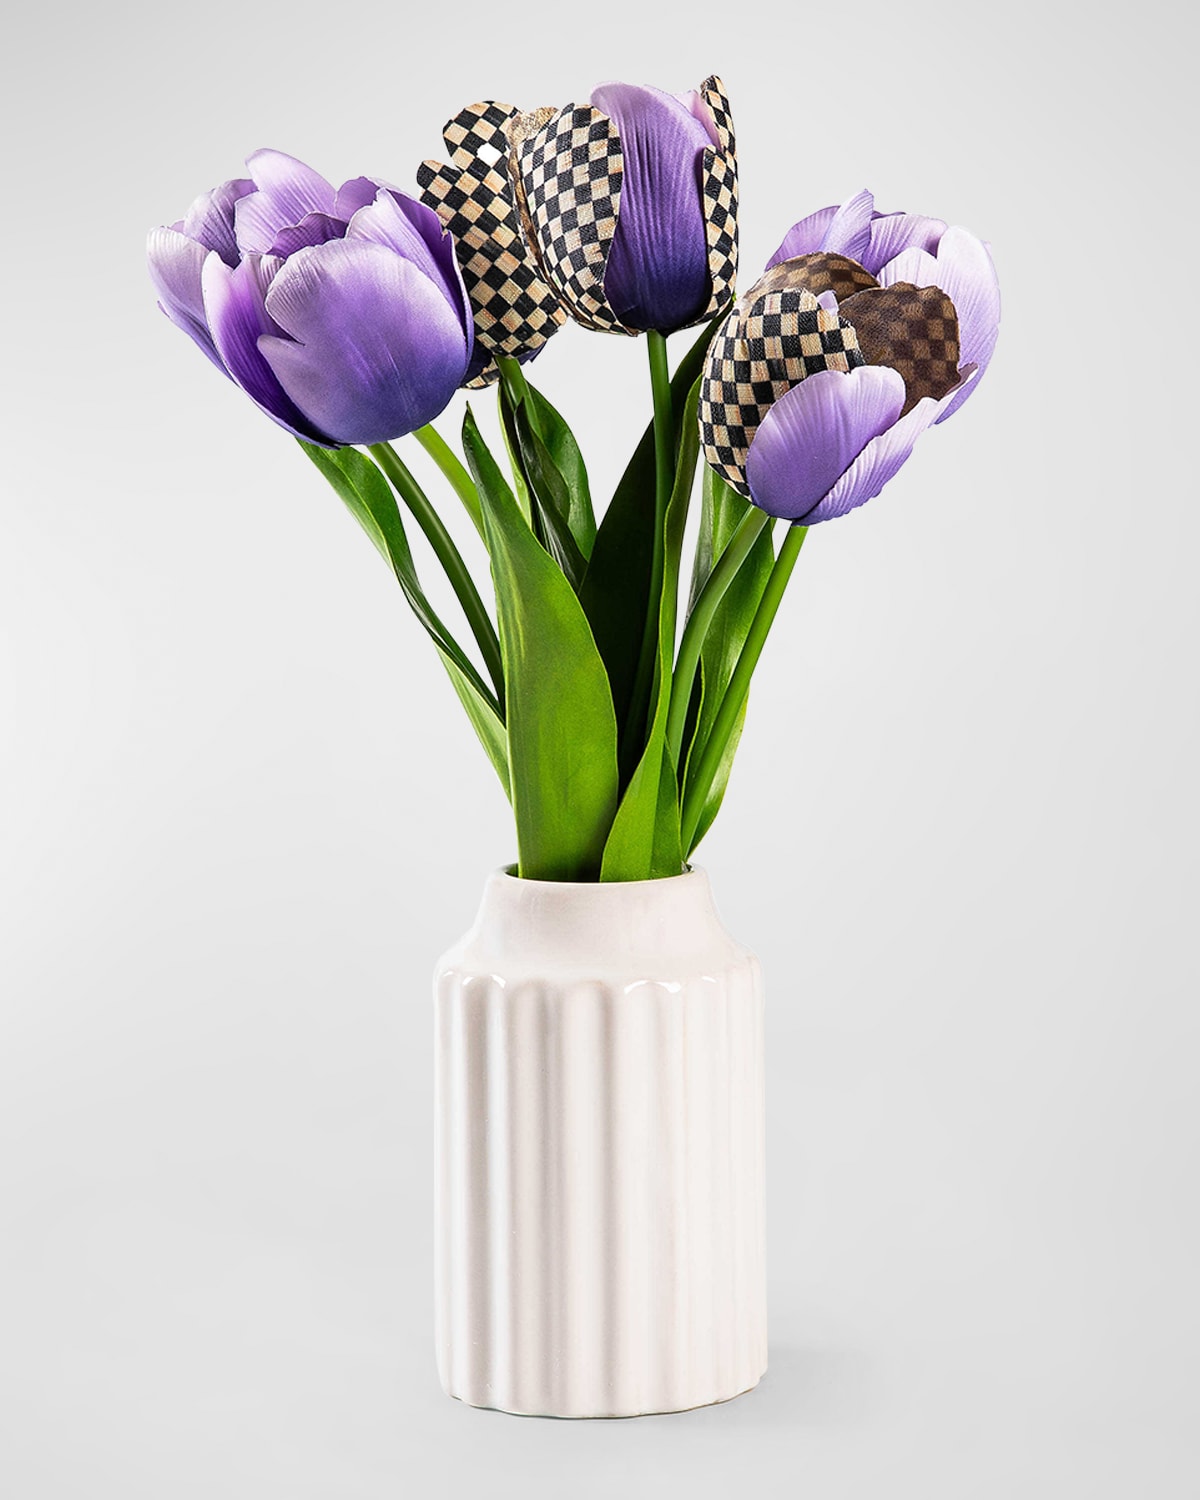 Mackenzie-childs Purple Tulips Fresh Picks 17" Faux Floral Arrangement In Ceramic Vase In White